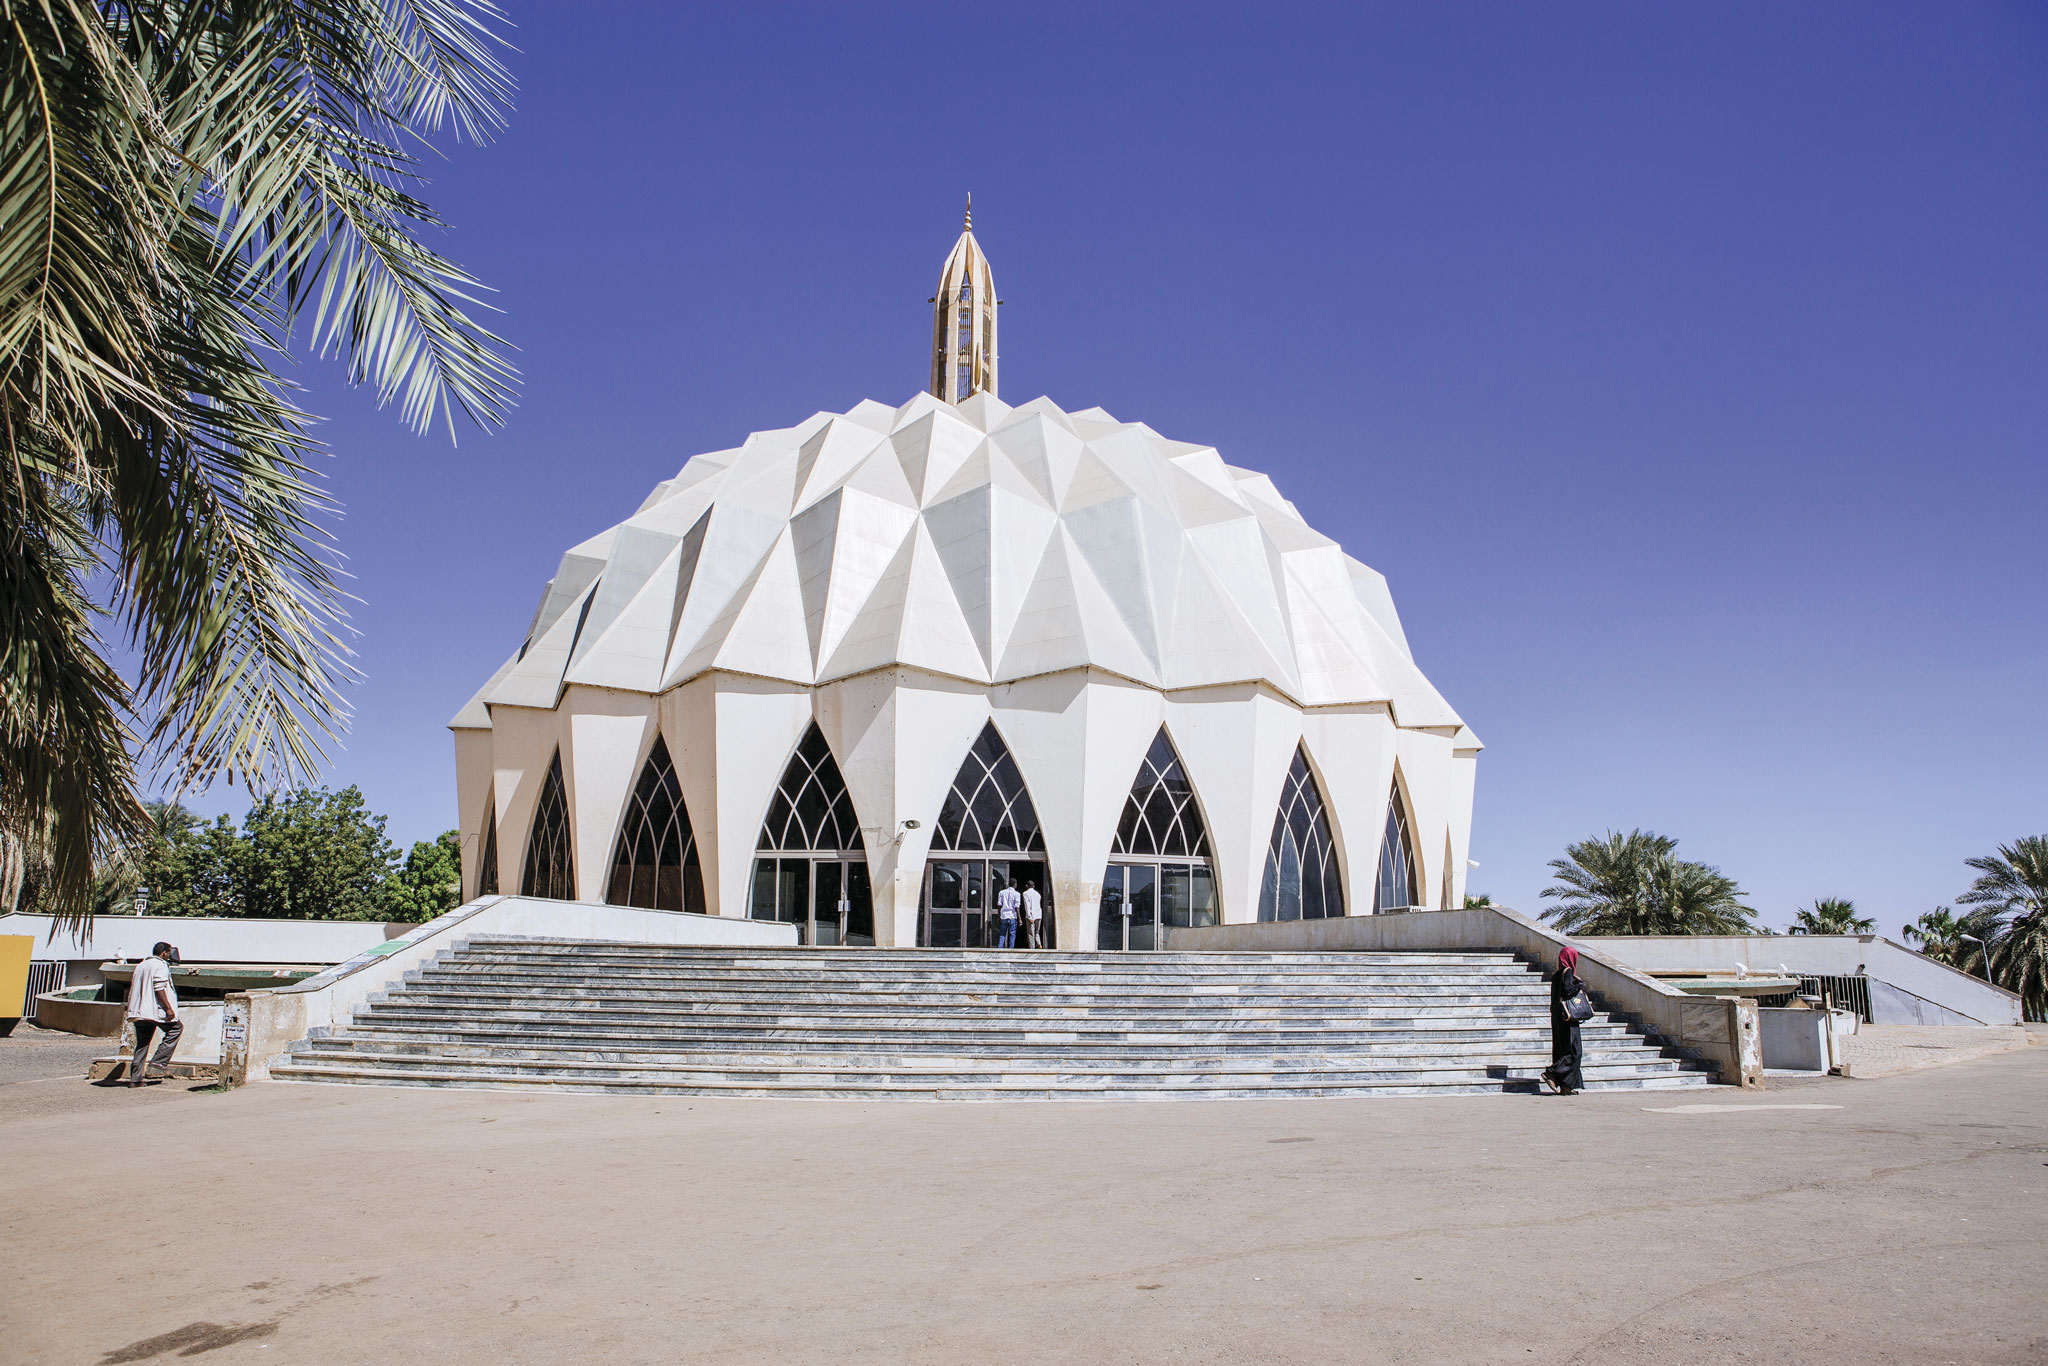 Al janad mosque. Мечеть Нилин Судан. Хартум Омдурман. Мечеть Халифа Омдурман. Город Омдурман Судан.